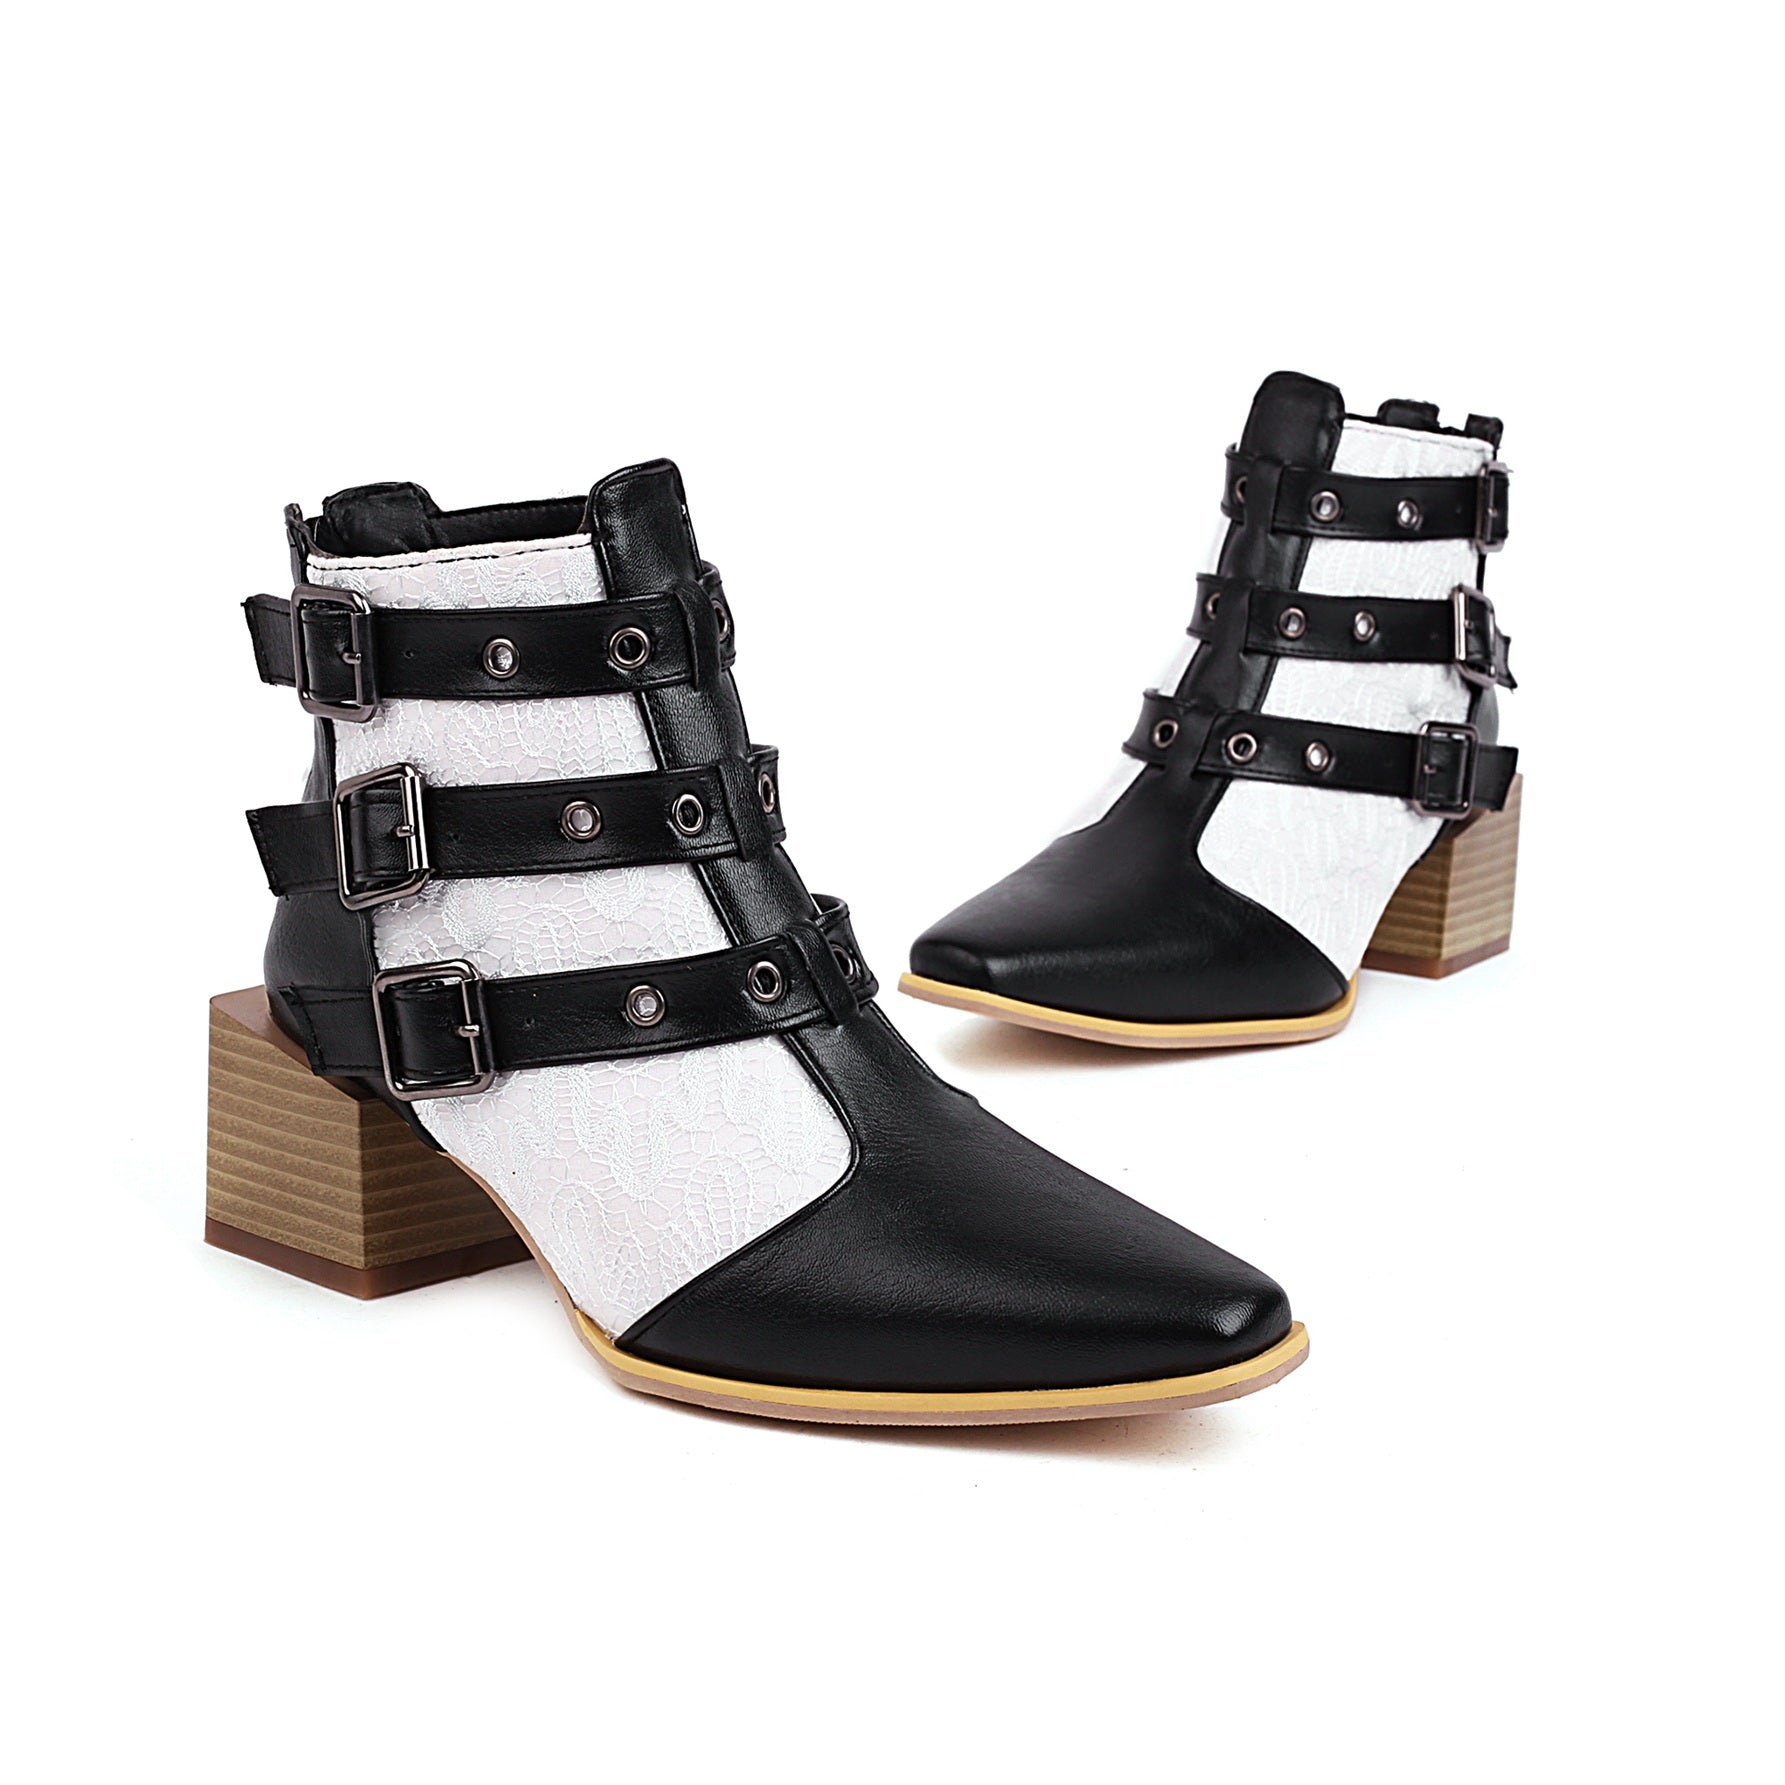 Bigsizeheels Fashion pointed square heel ankle boots - Black&White freeshipping - bigsizeheel®-size5-size15 -All Plus Sizes Available!